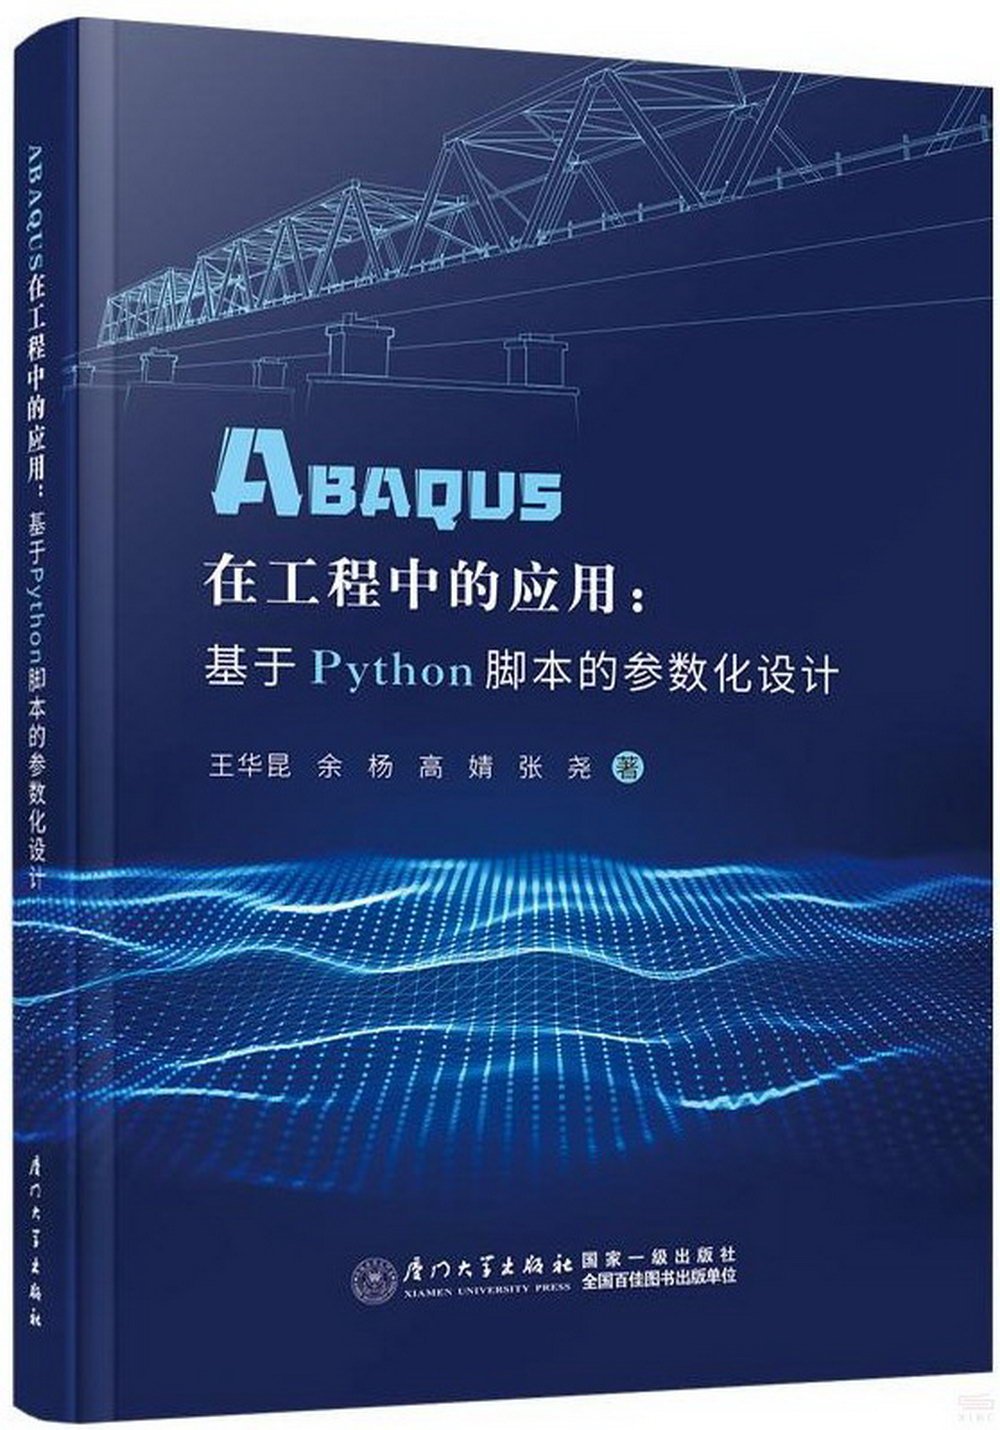 ABAQUS在工程中的應用：基於Python腳本的參數化設計